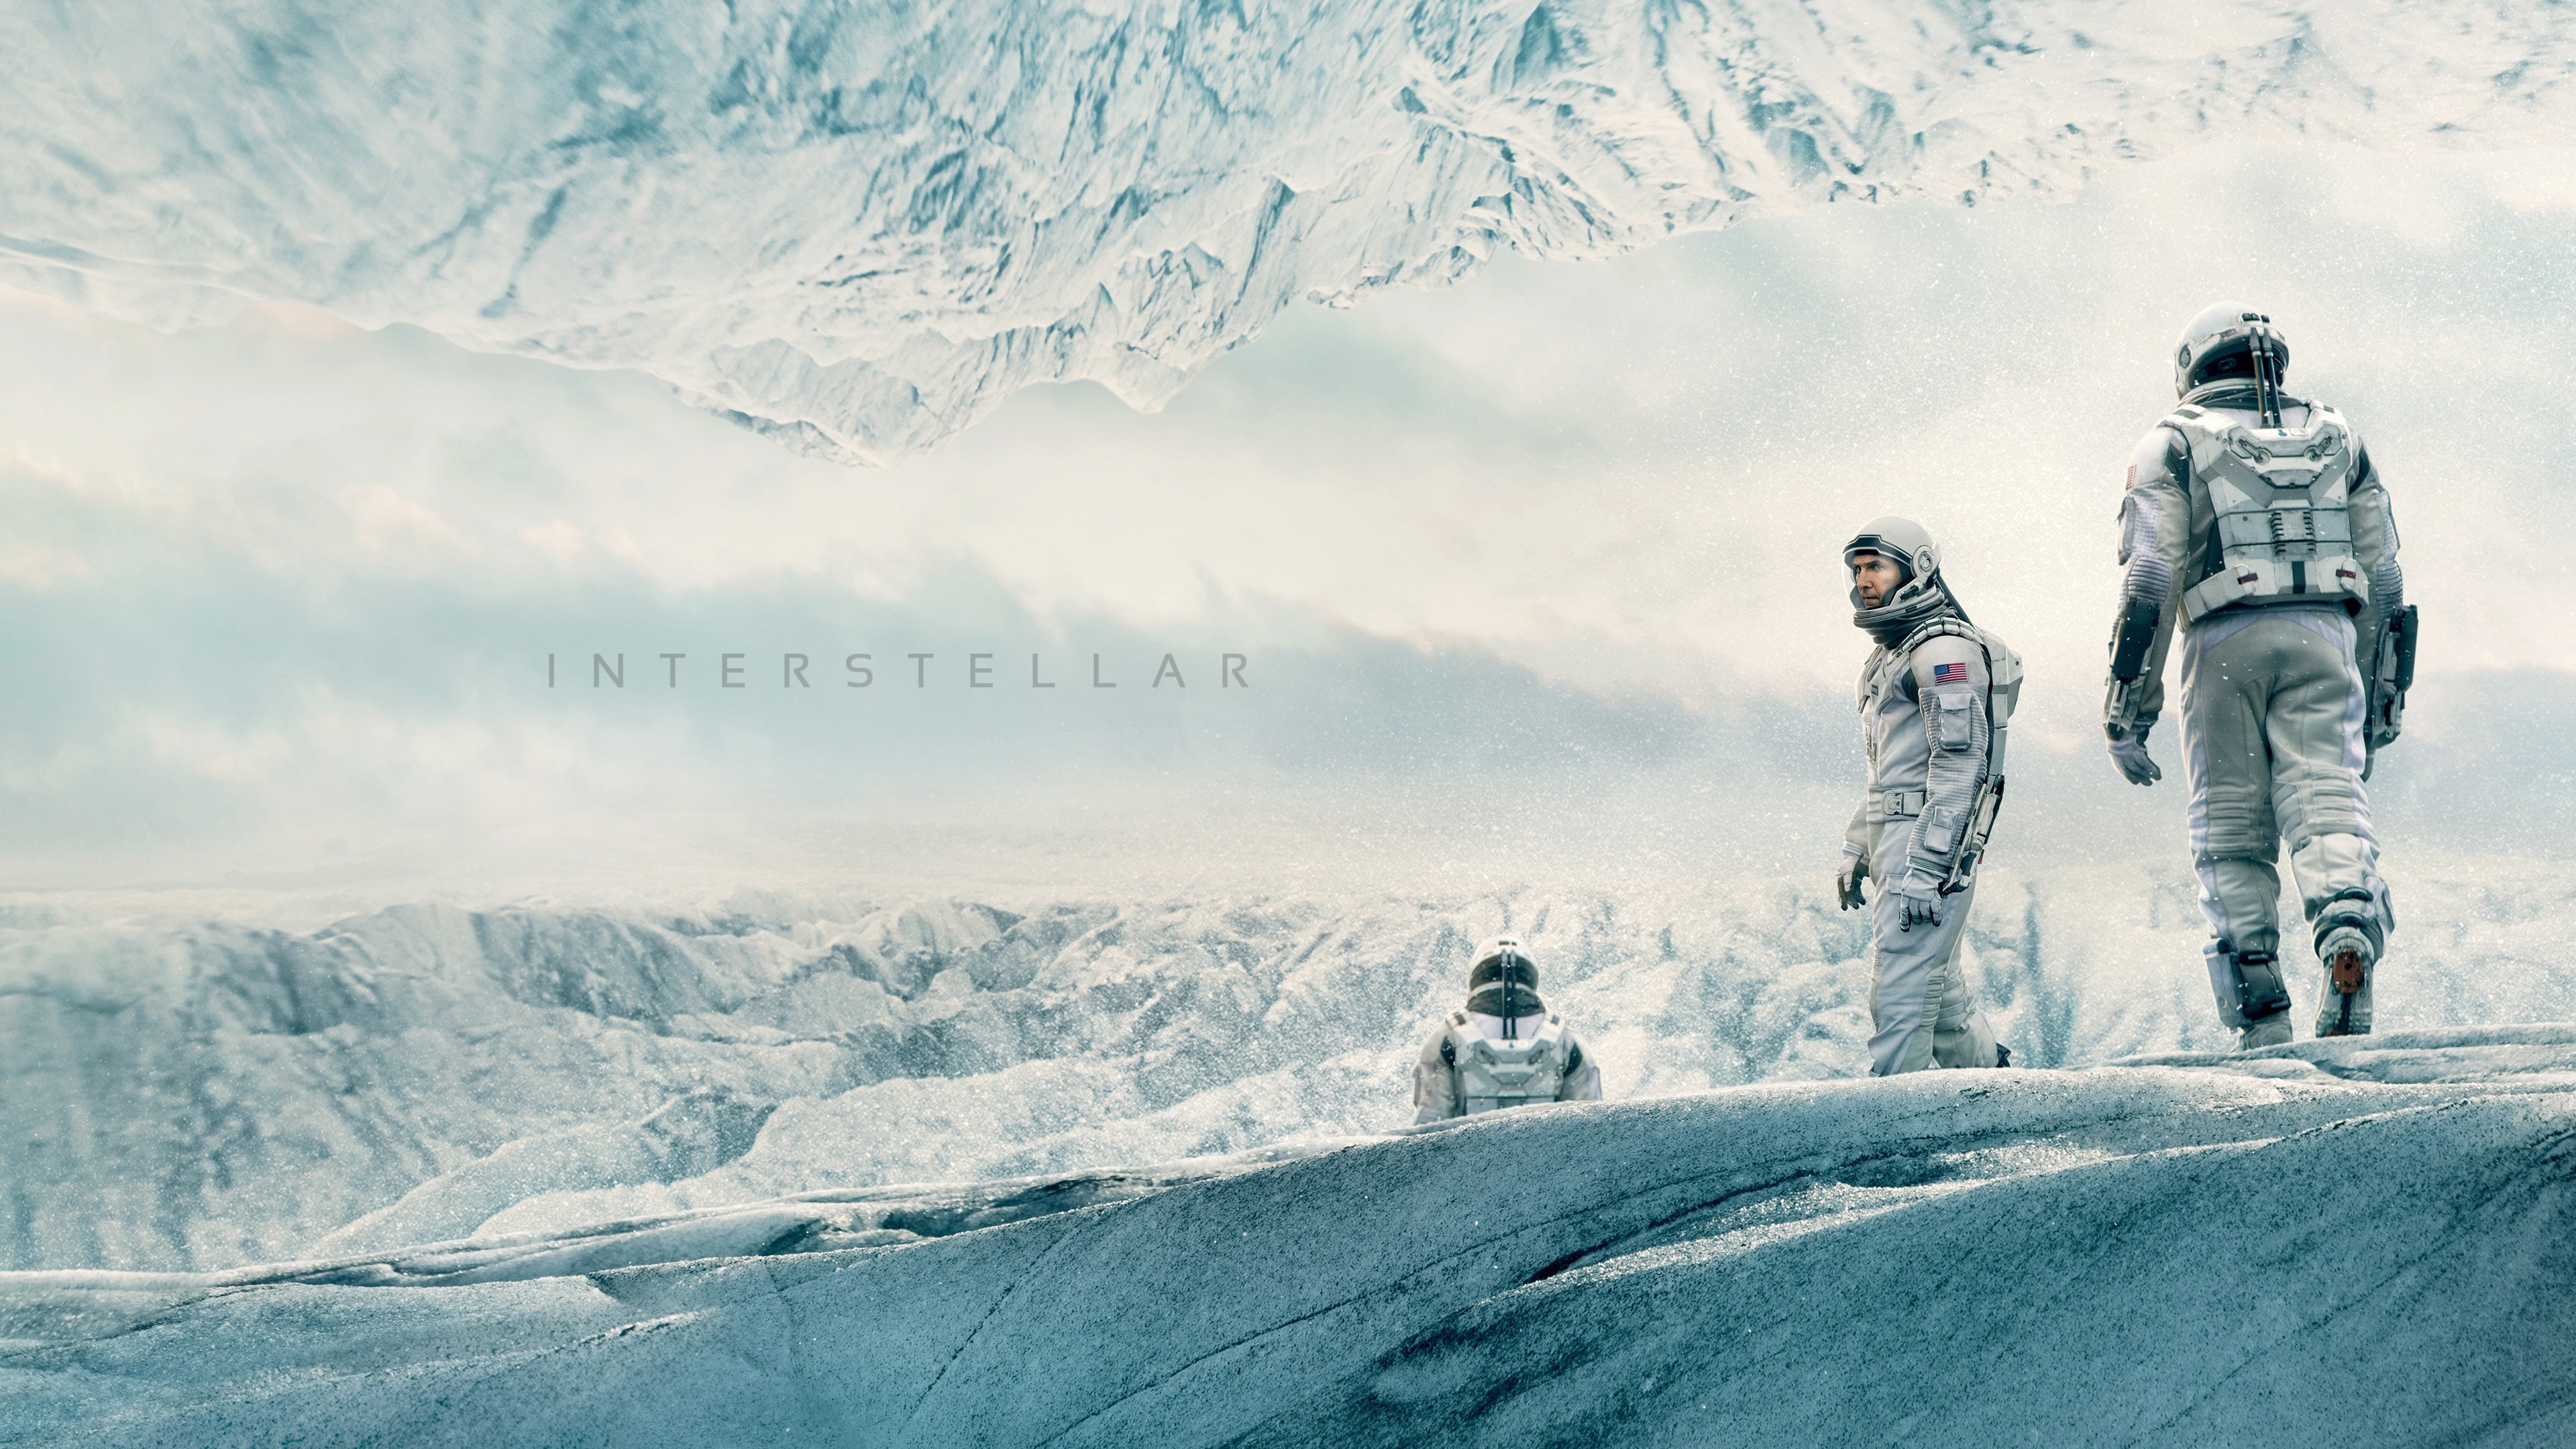 General 3840x2160 space Interstellar (movie) movies science fiction digital art text